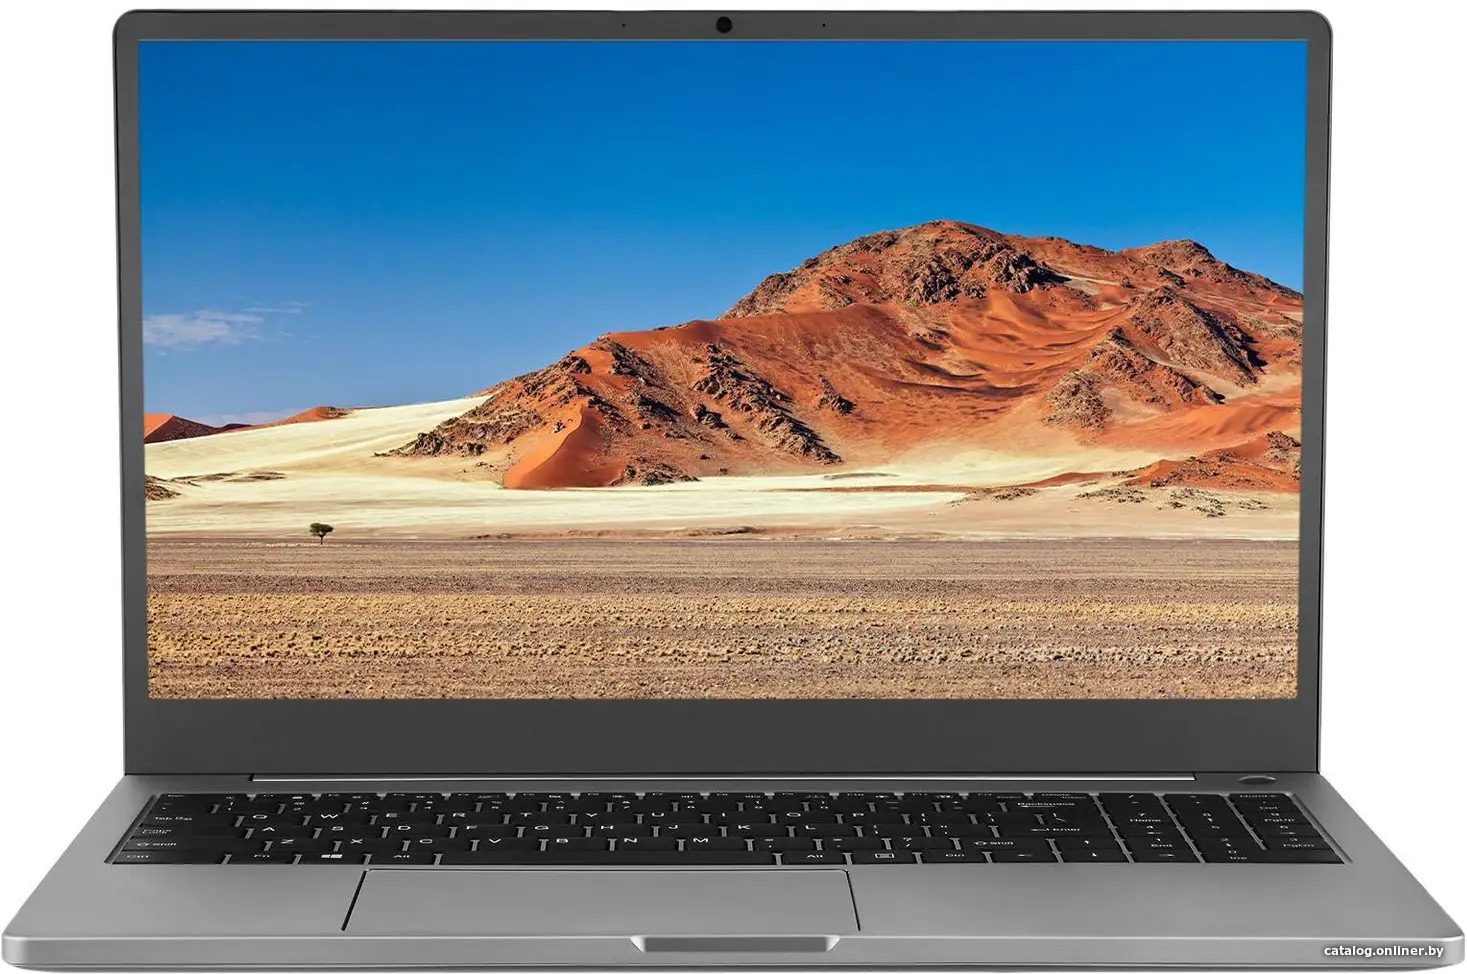 Купить Ноутбук Rombica MyBook Zenith (PCLT-0019), цена, опт и розница